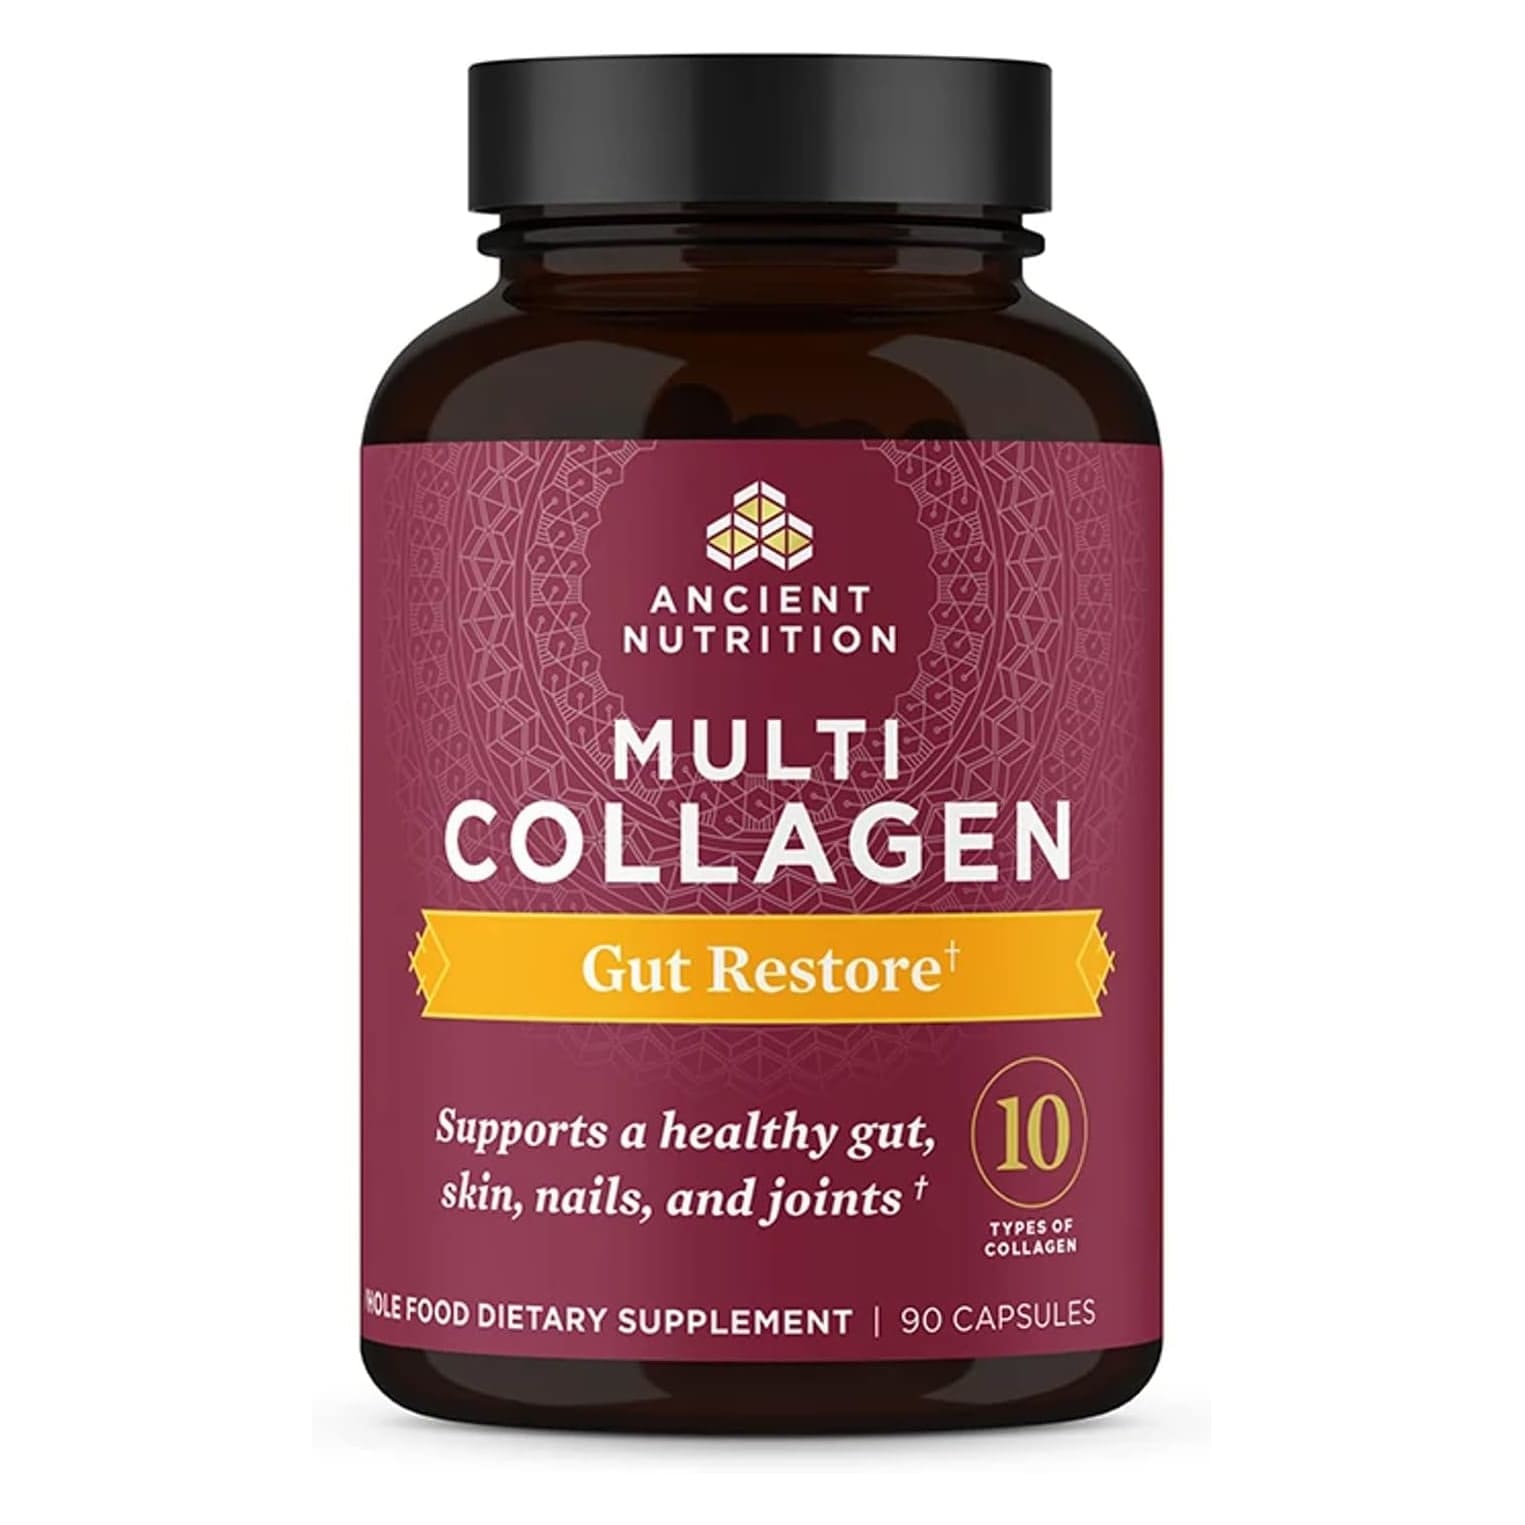 Коллаген Ancient Nutrition Multi Gut Restore 10 Types, 90 капсул